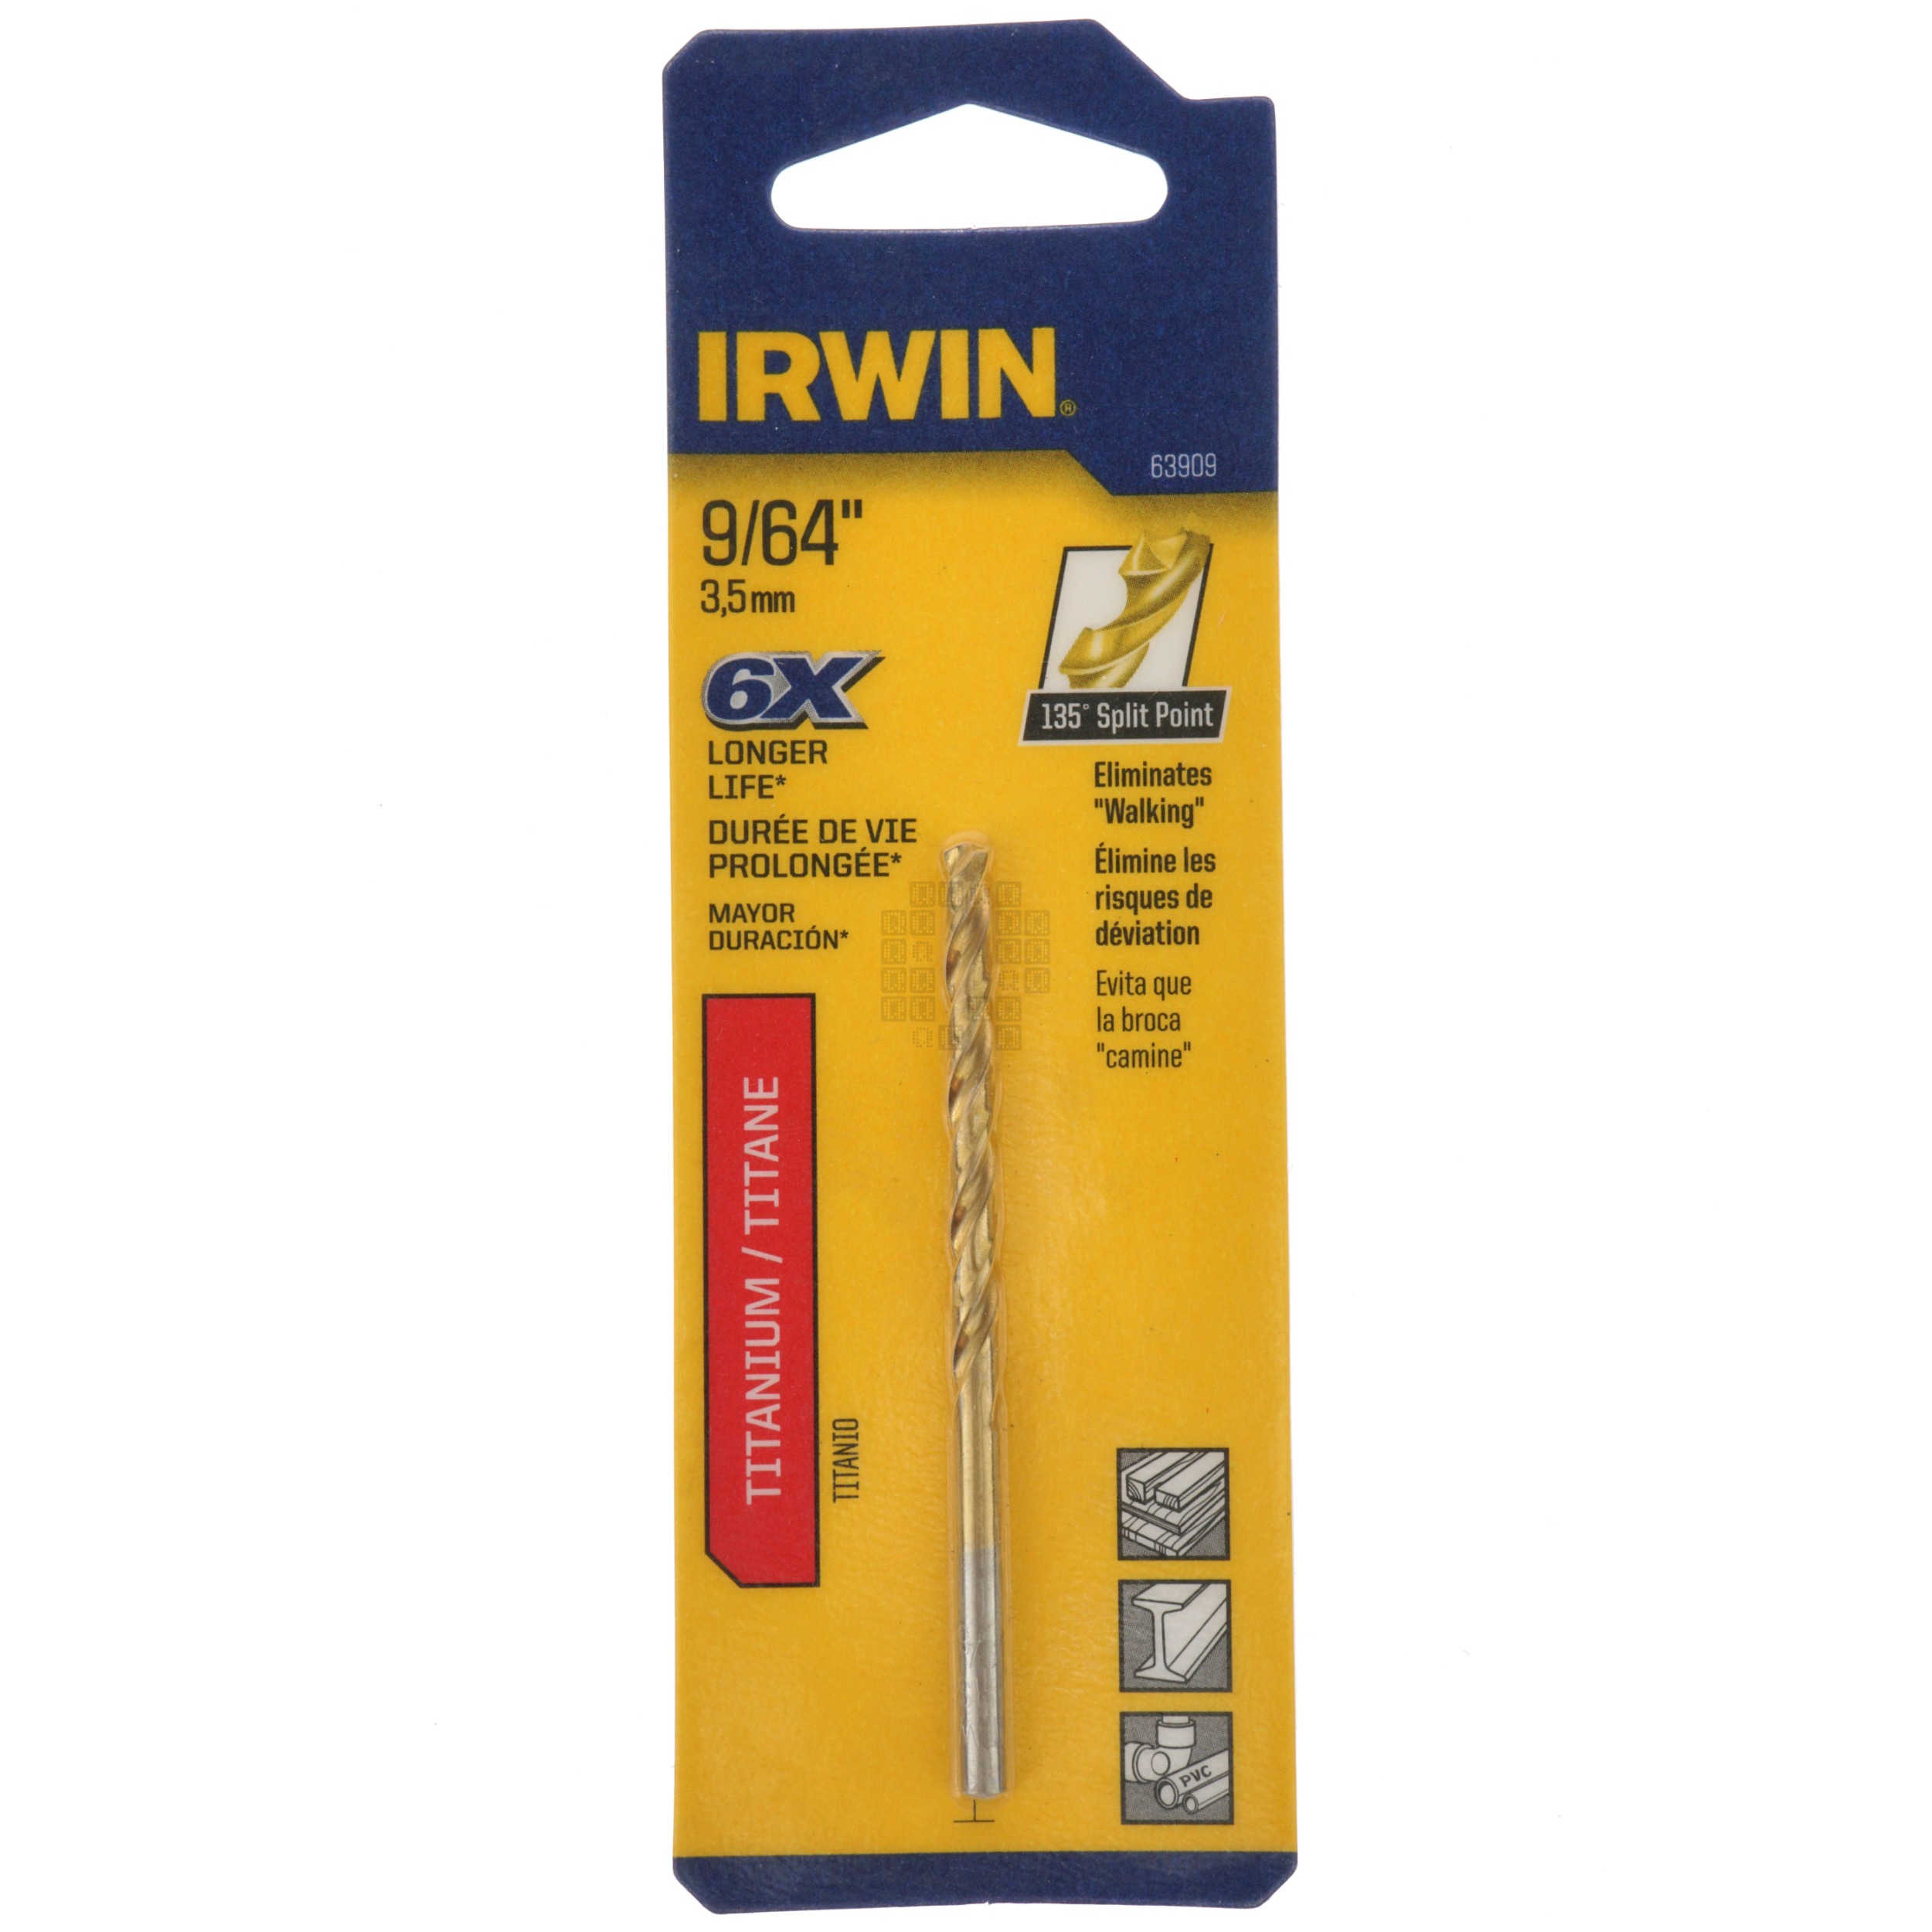 Irwin 63909 9/64" Titanium Coated 135° Split Point Drill Bit